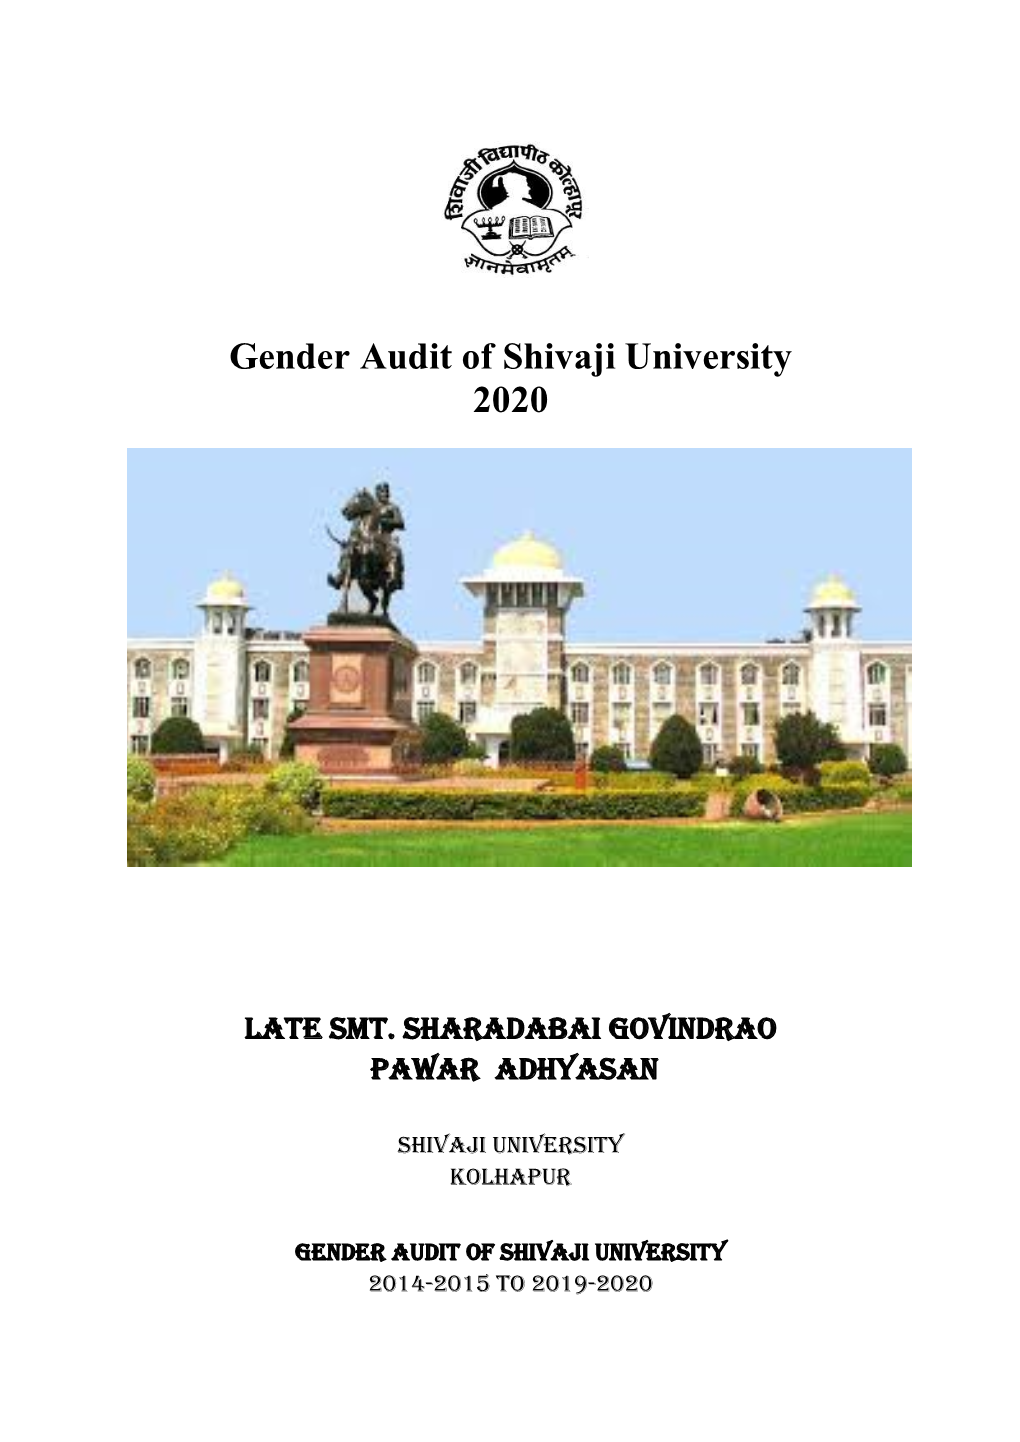 Gender Audit of Shivaji University 2020